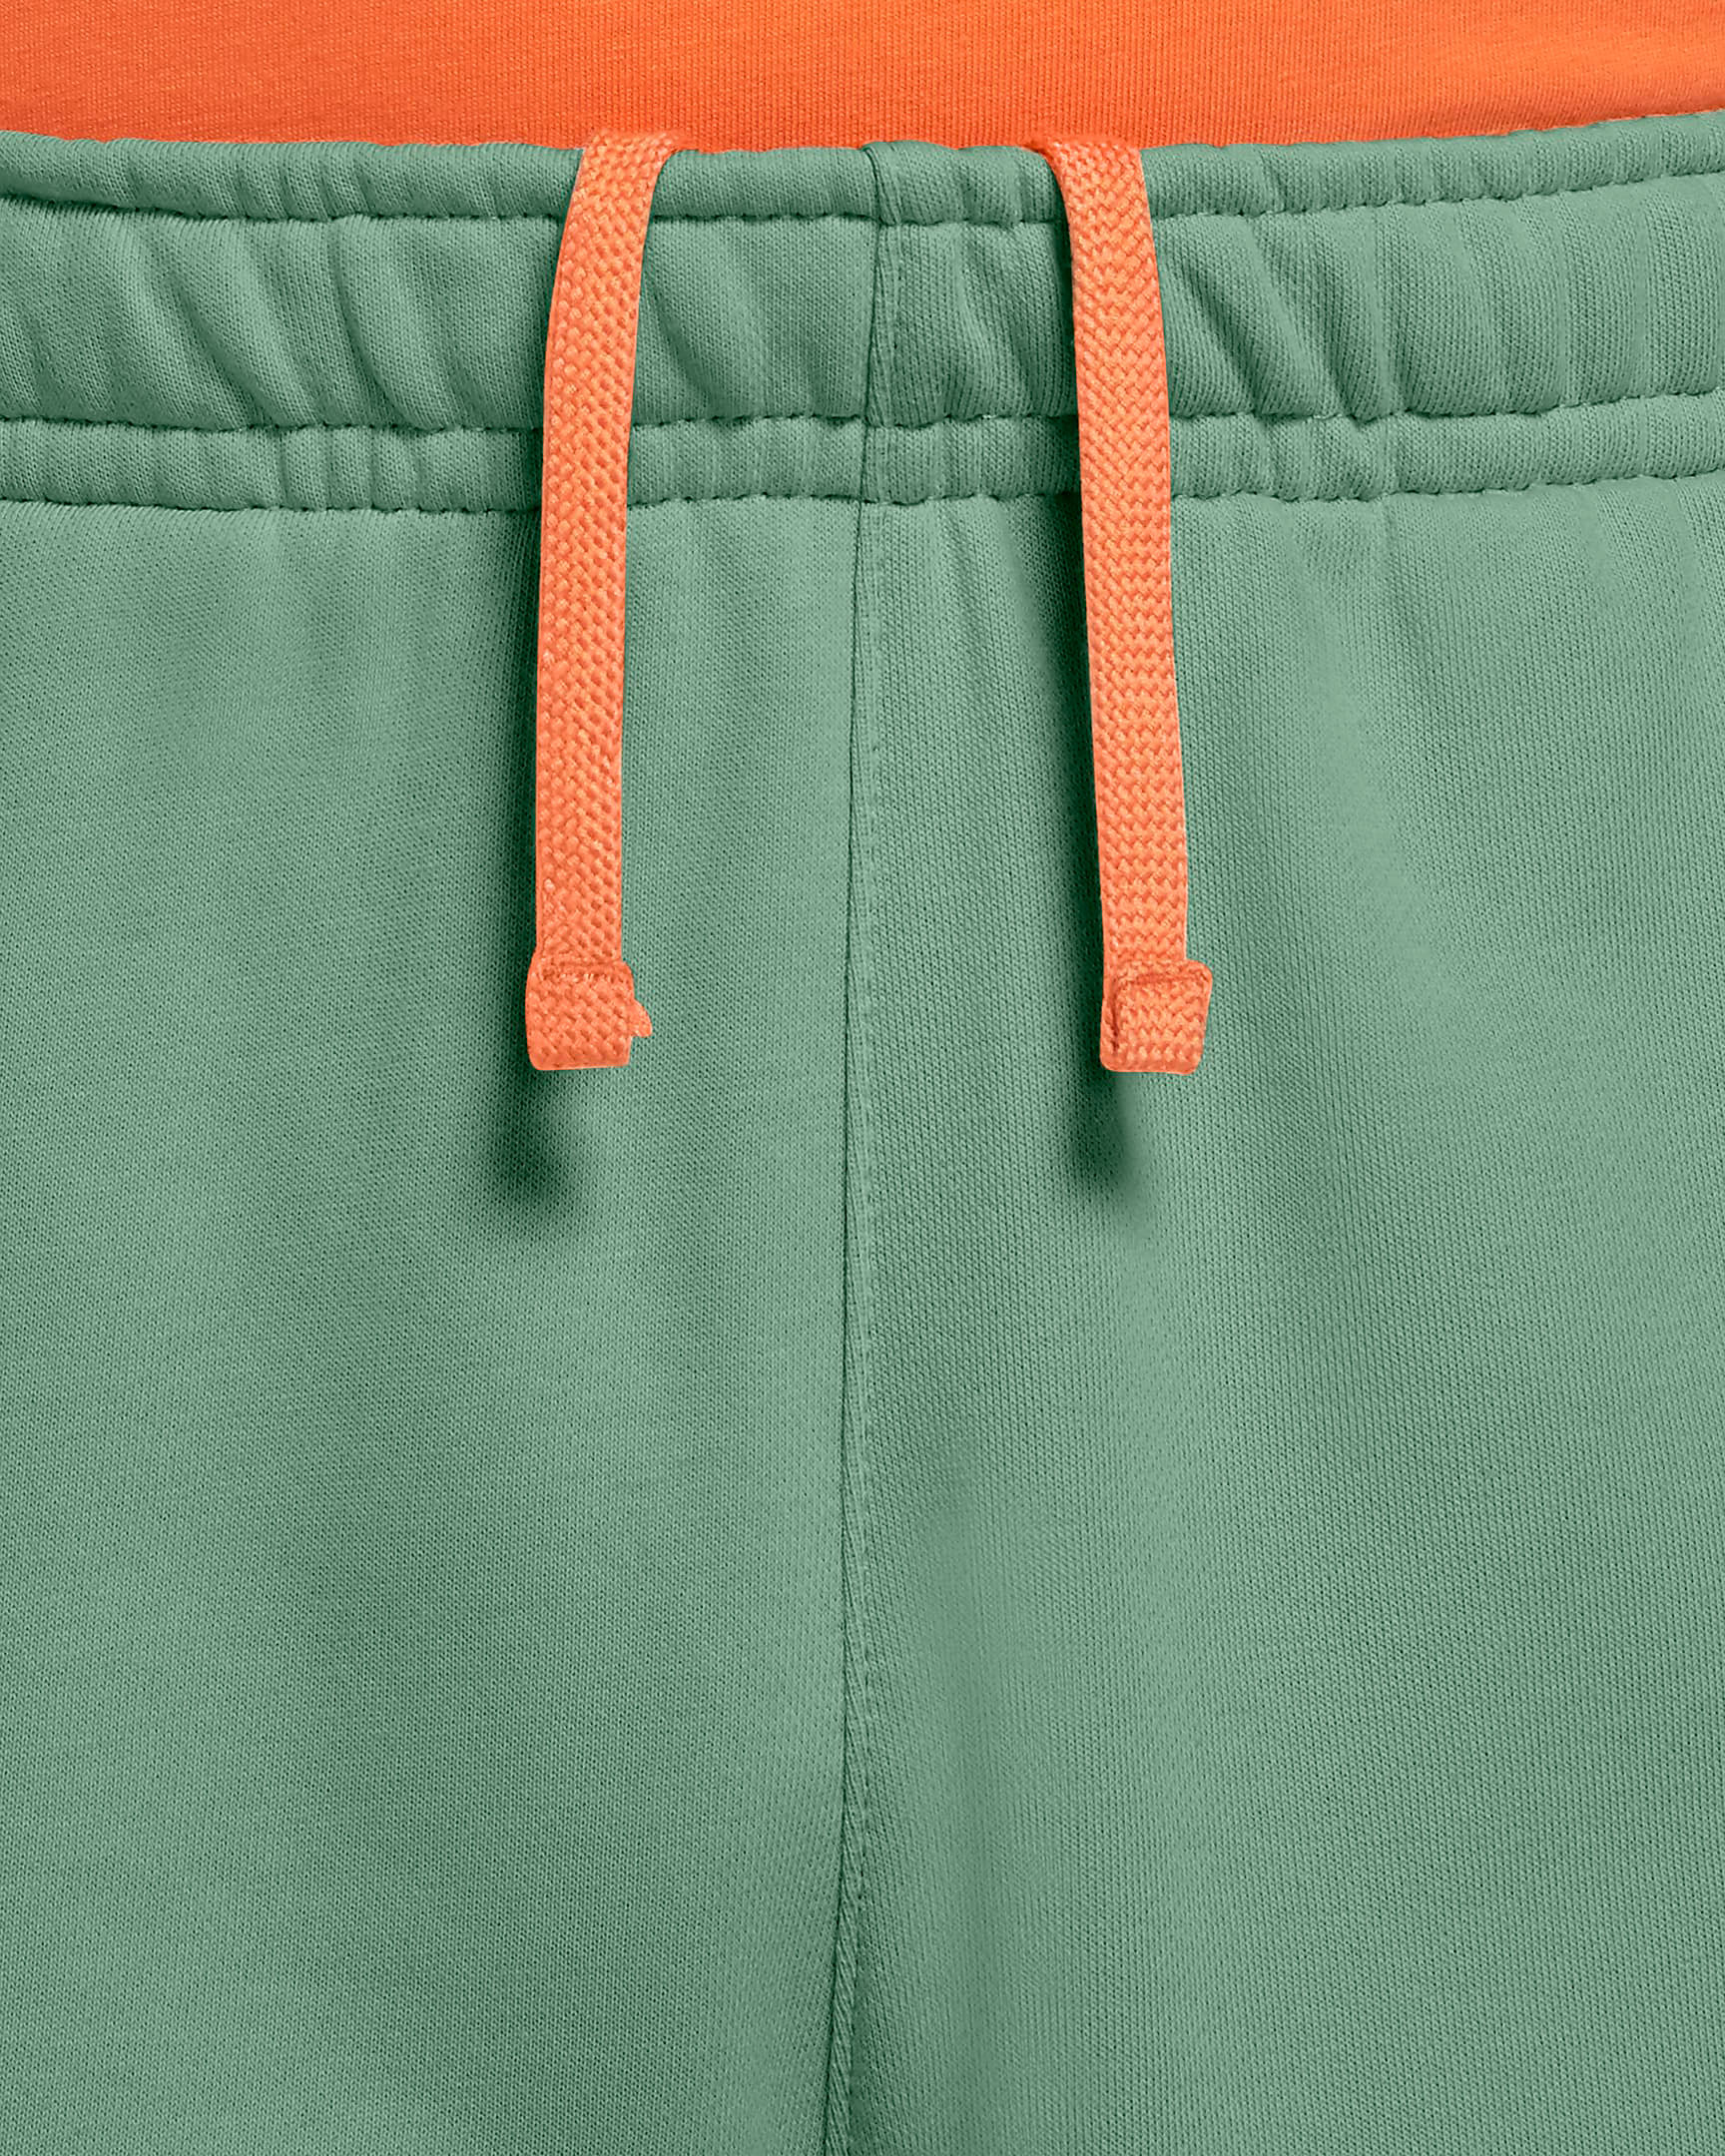 nike-sportswear-be-kind-green-orange-shorts-3